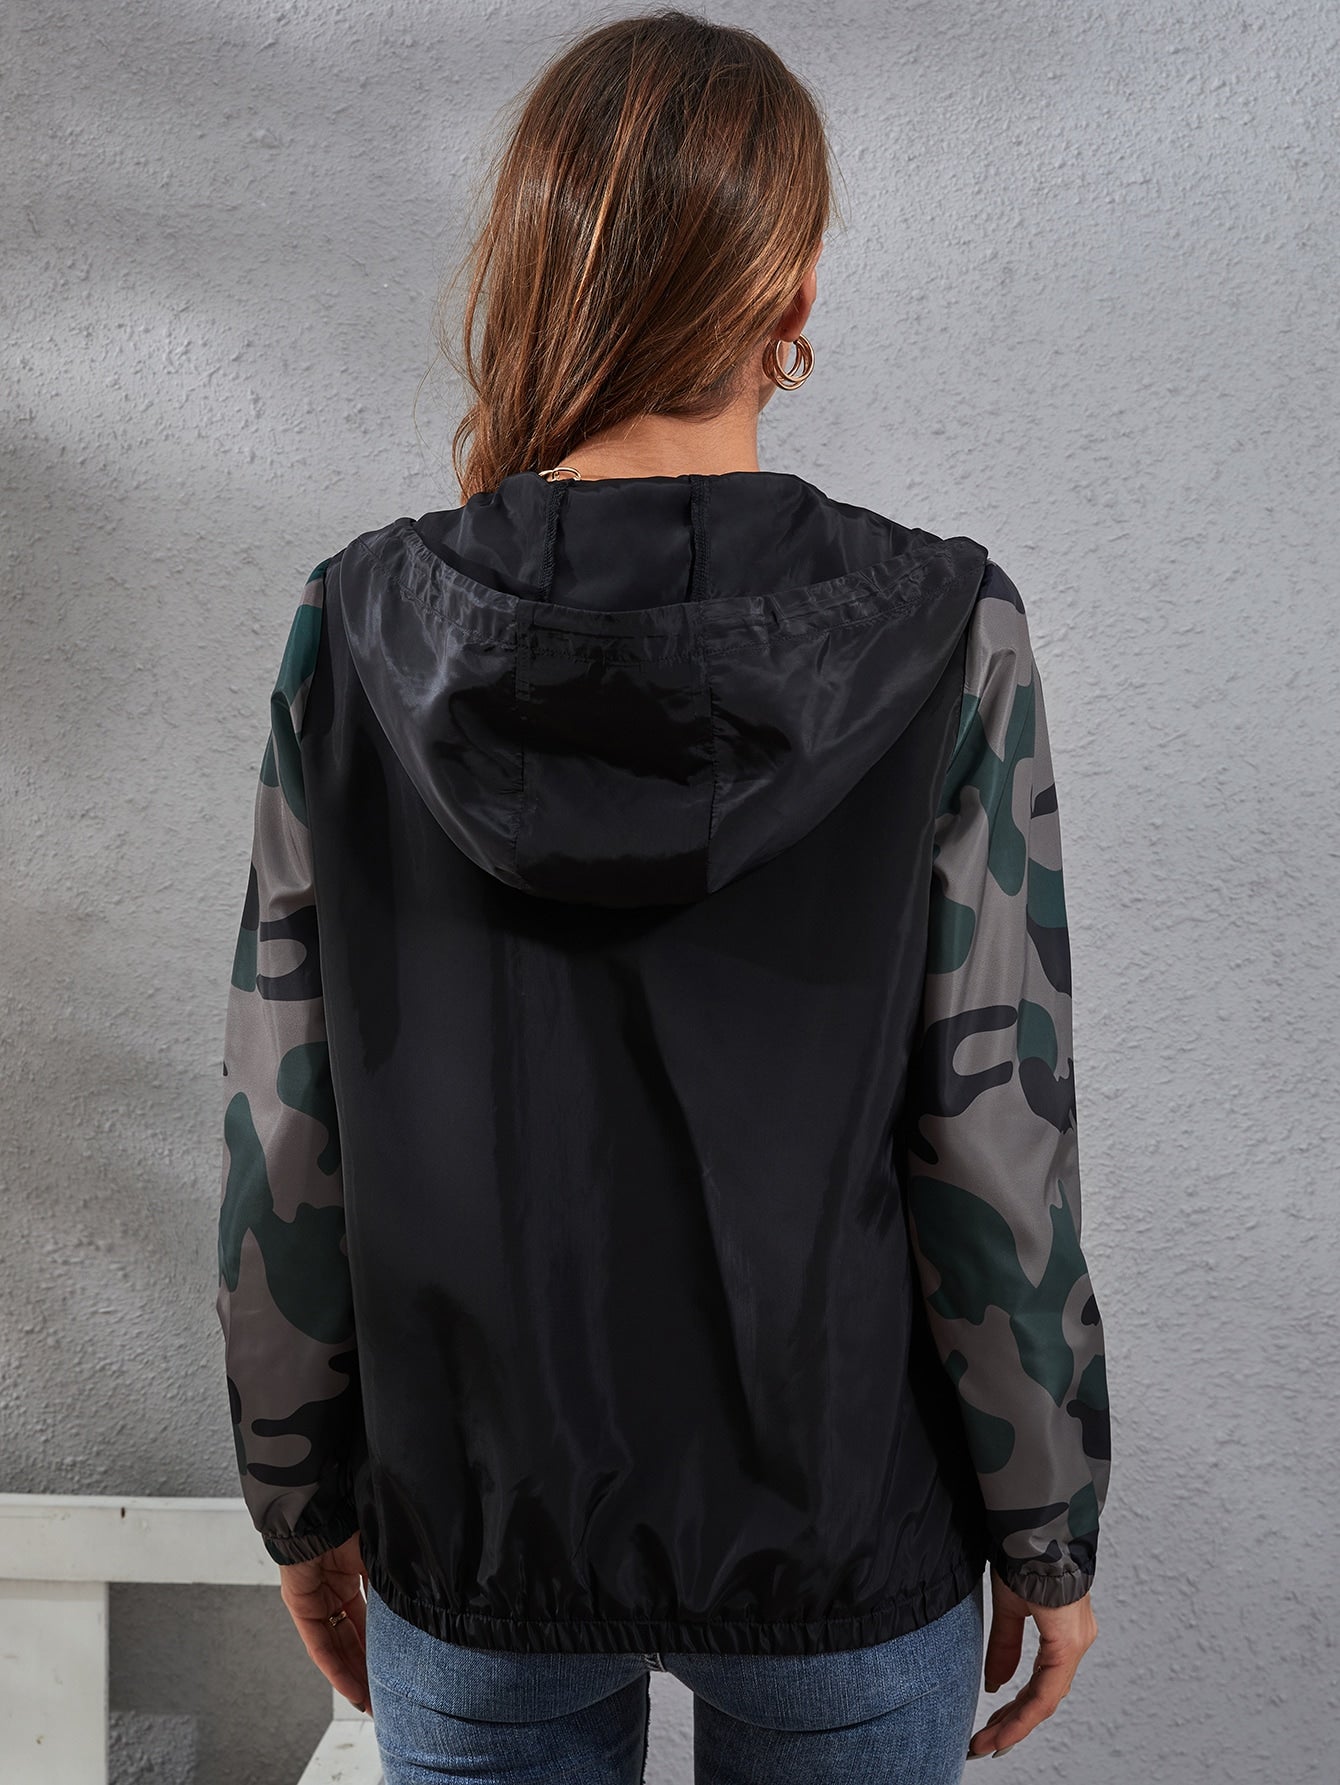 Contrast Camo Sleeve Drawstring Hooded Jacket